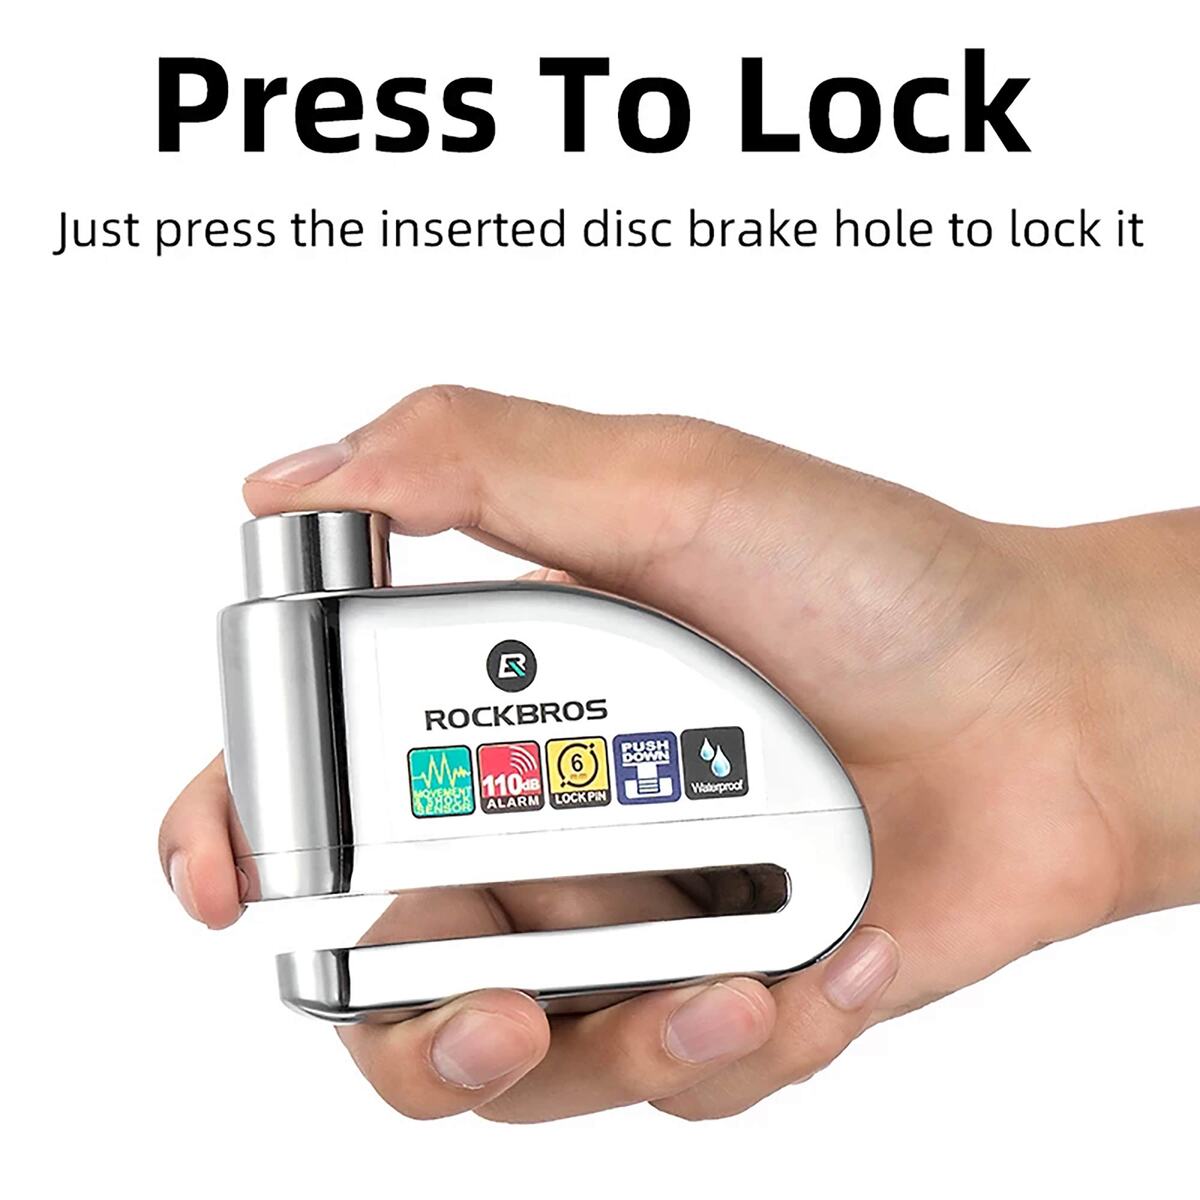 ROCKBROS Alarm Disc Brake Lock LBAYG8308